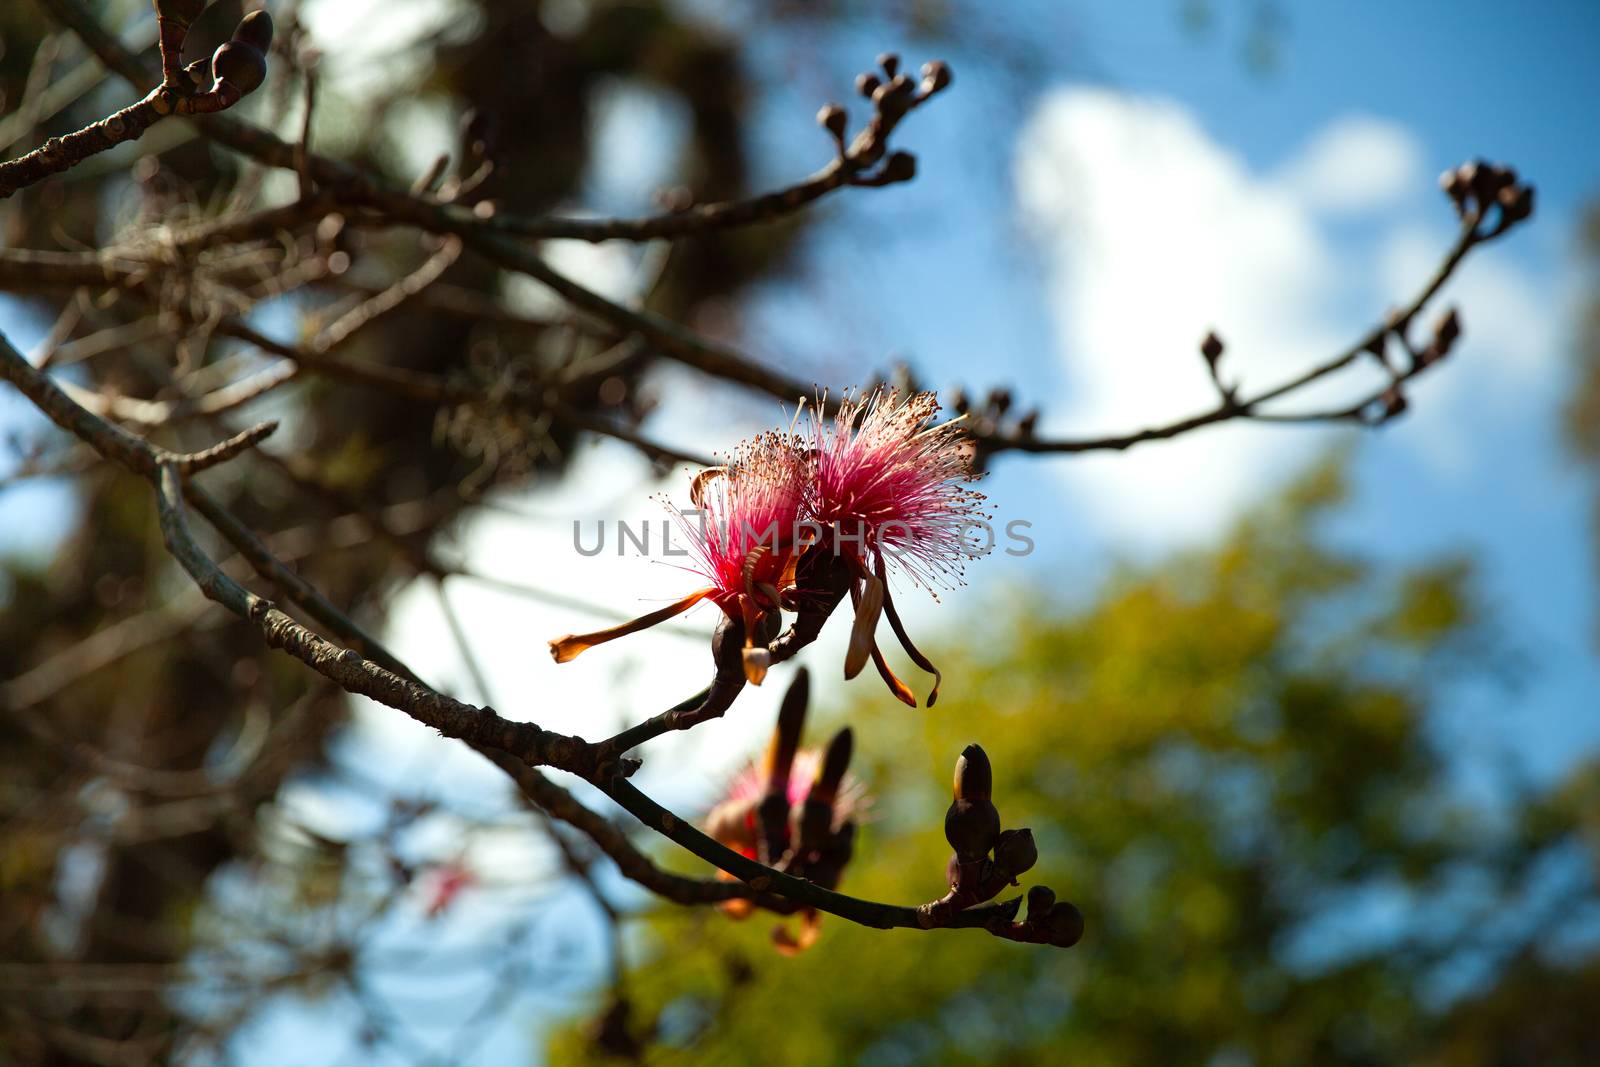 Pink pseudobombax ellipticum or shaving brush tree, Dr Seuss tree, Cienfuegos, Cuba